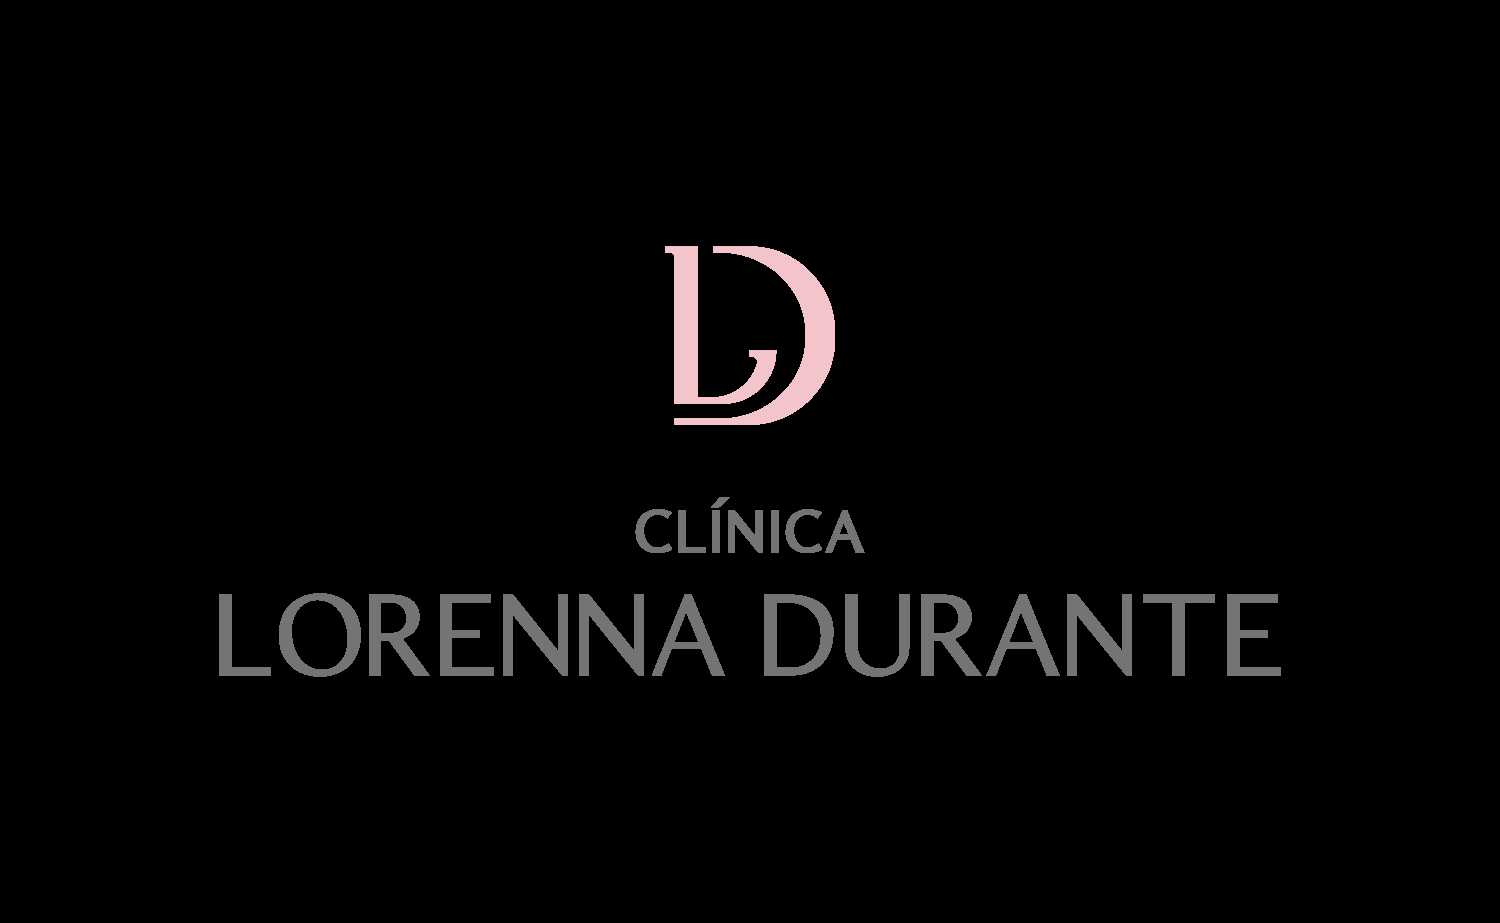 Clínica Lorenna Durante